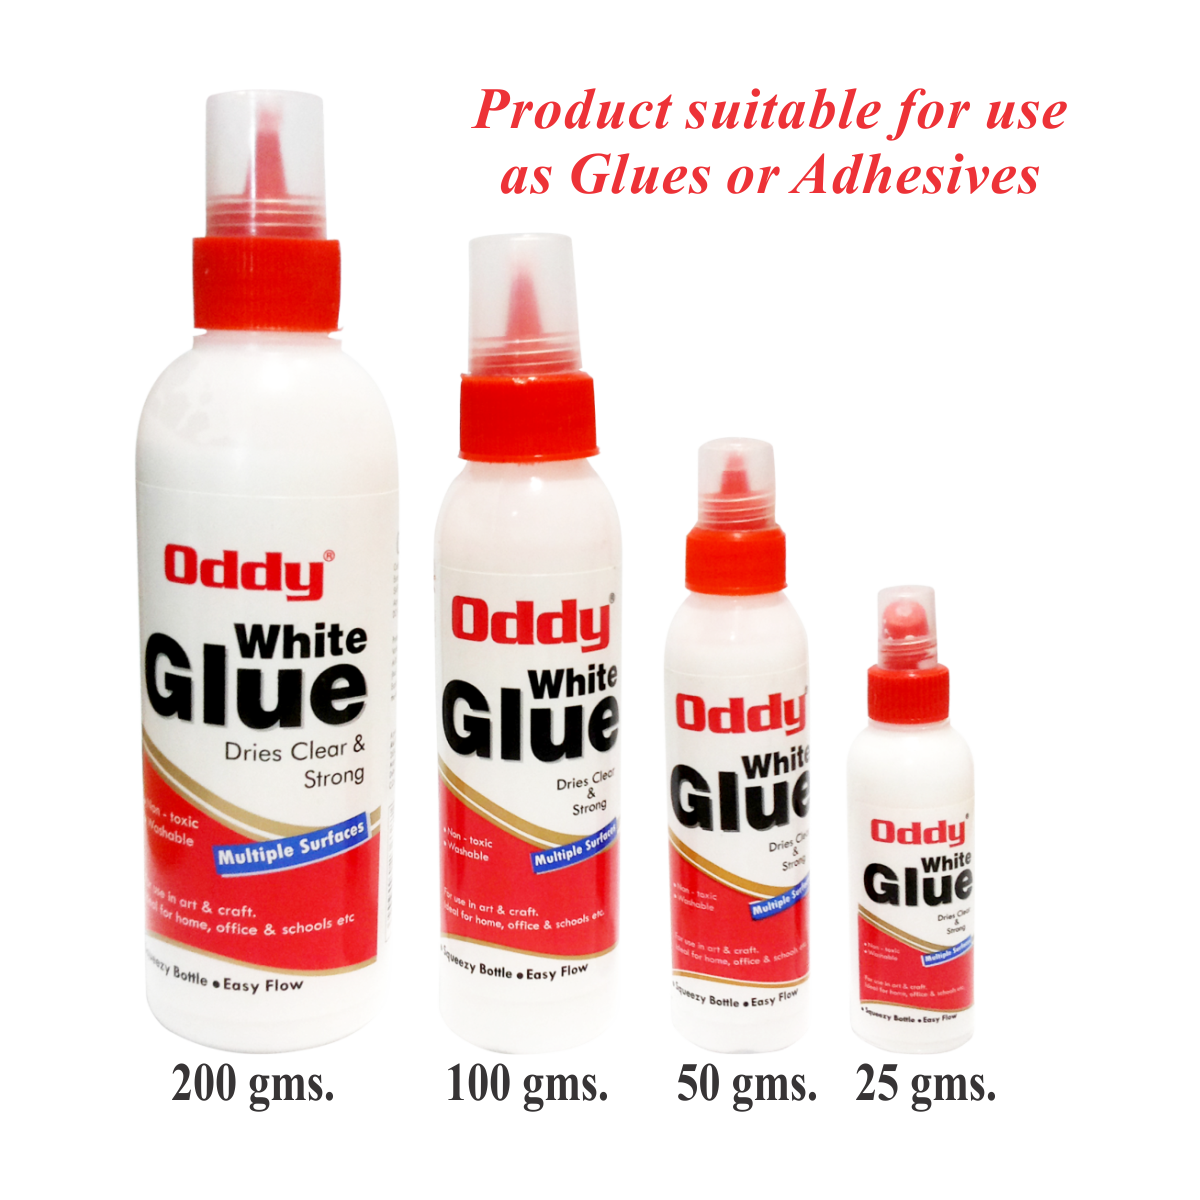 White Glue of fine quality by Oddy